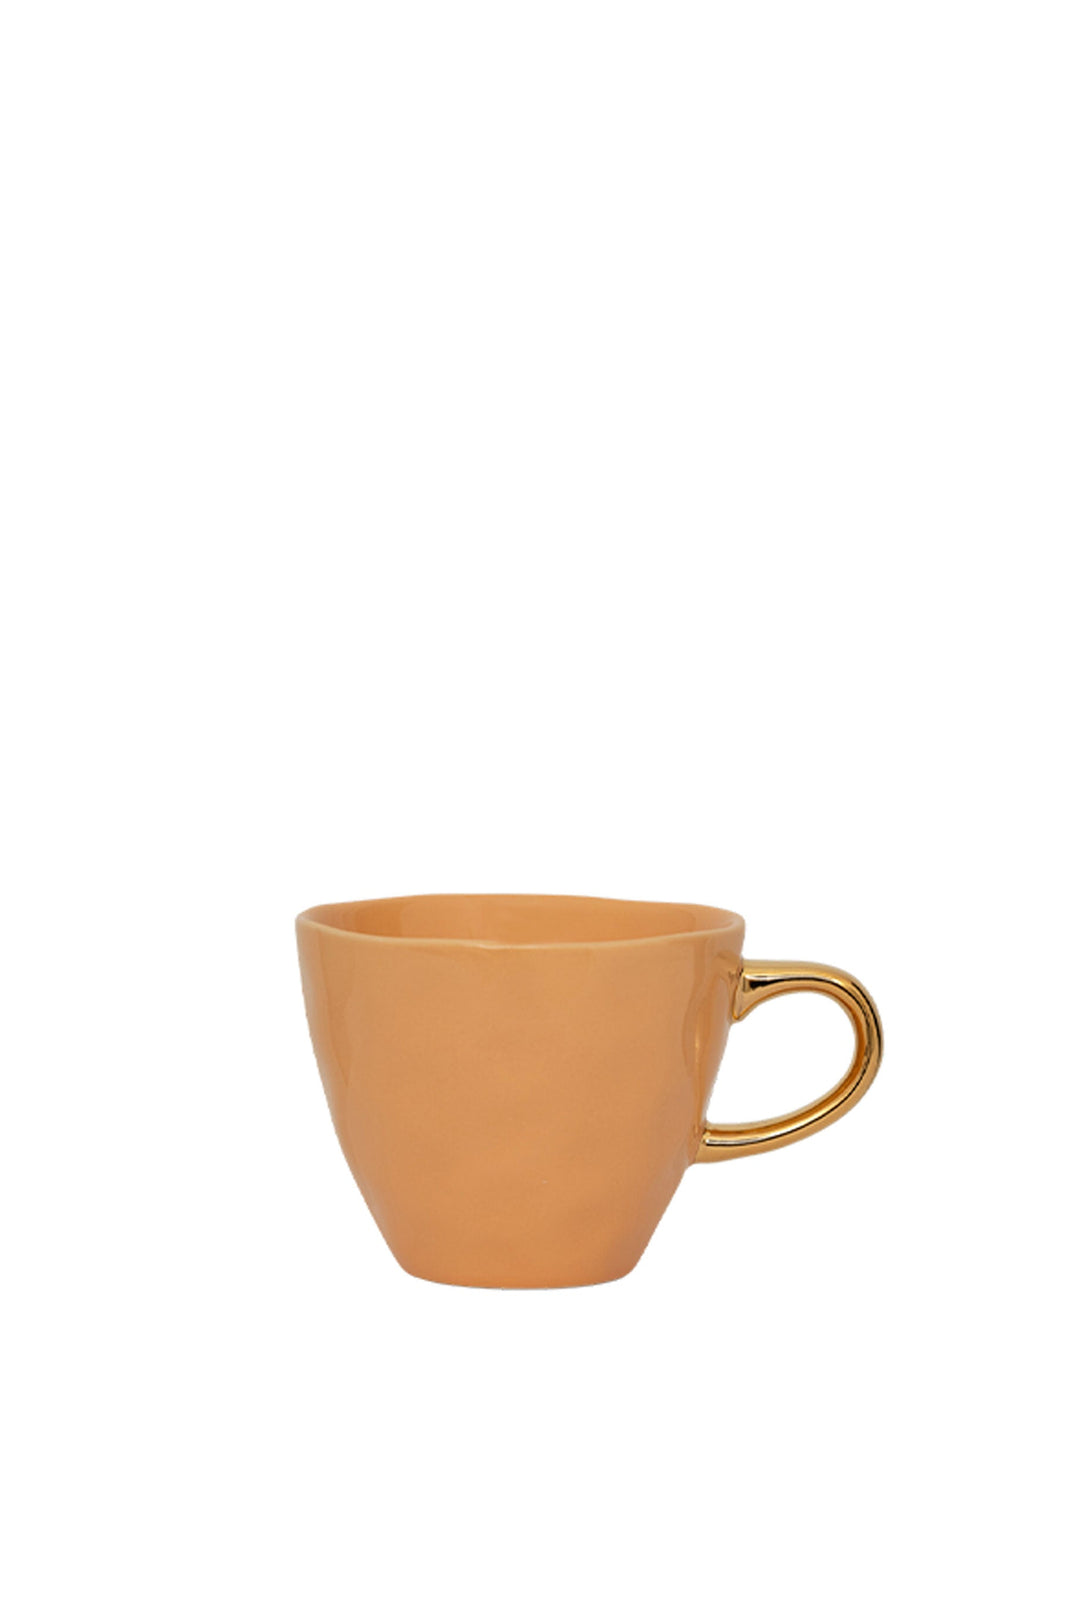 Husk COFFEE CUP - Apricot